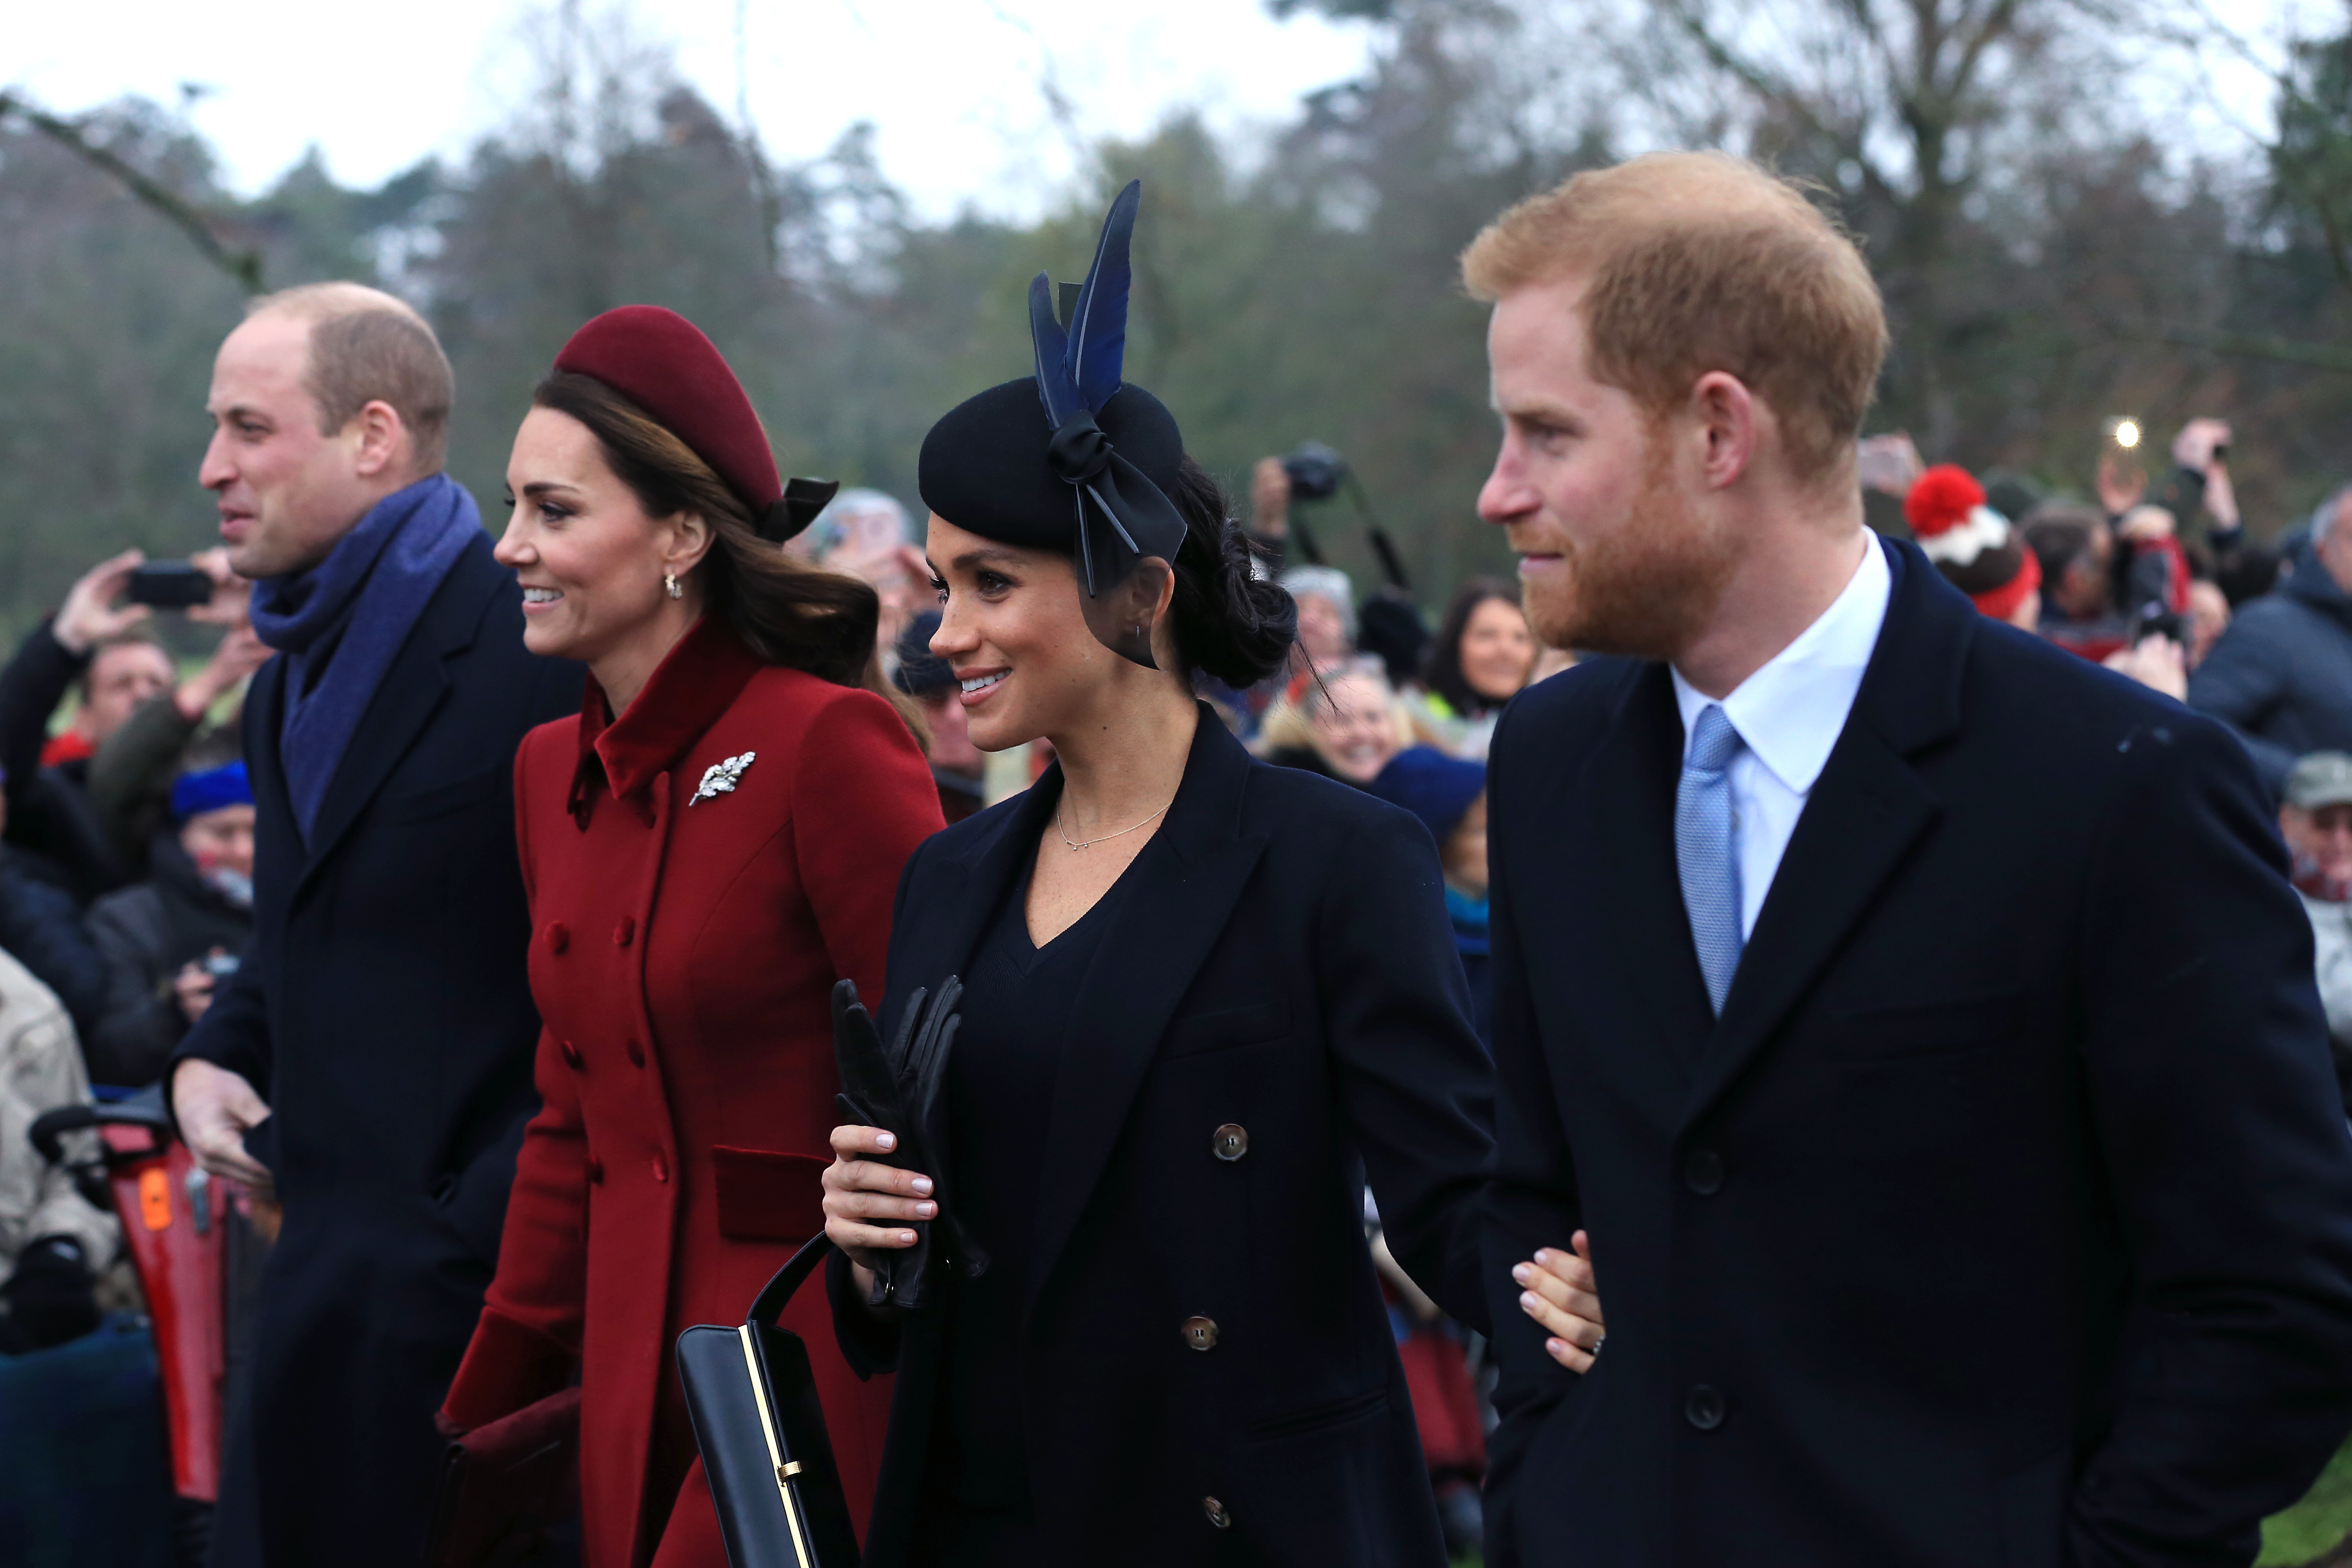 Prince Harry และ Meghan Markle เอาชนะ Prince William และ Kate Middleton เป็นคู่รักอันดับต้น ๆ ในรายการใหม่